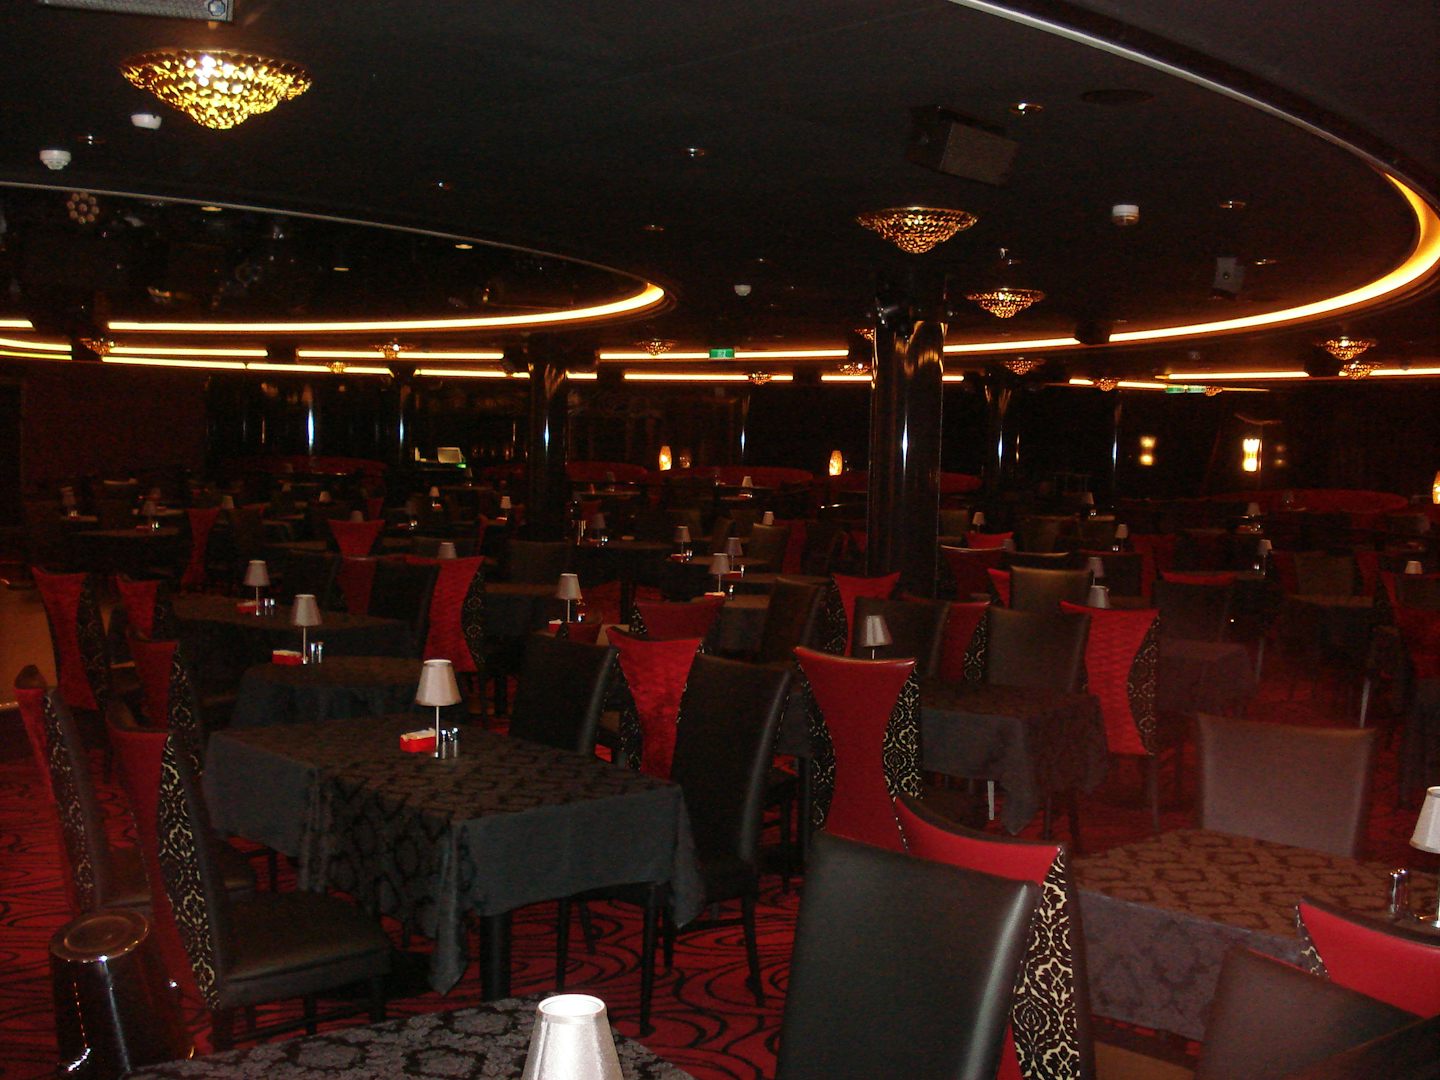 Diner Shows venue: Supper Club